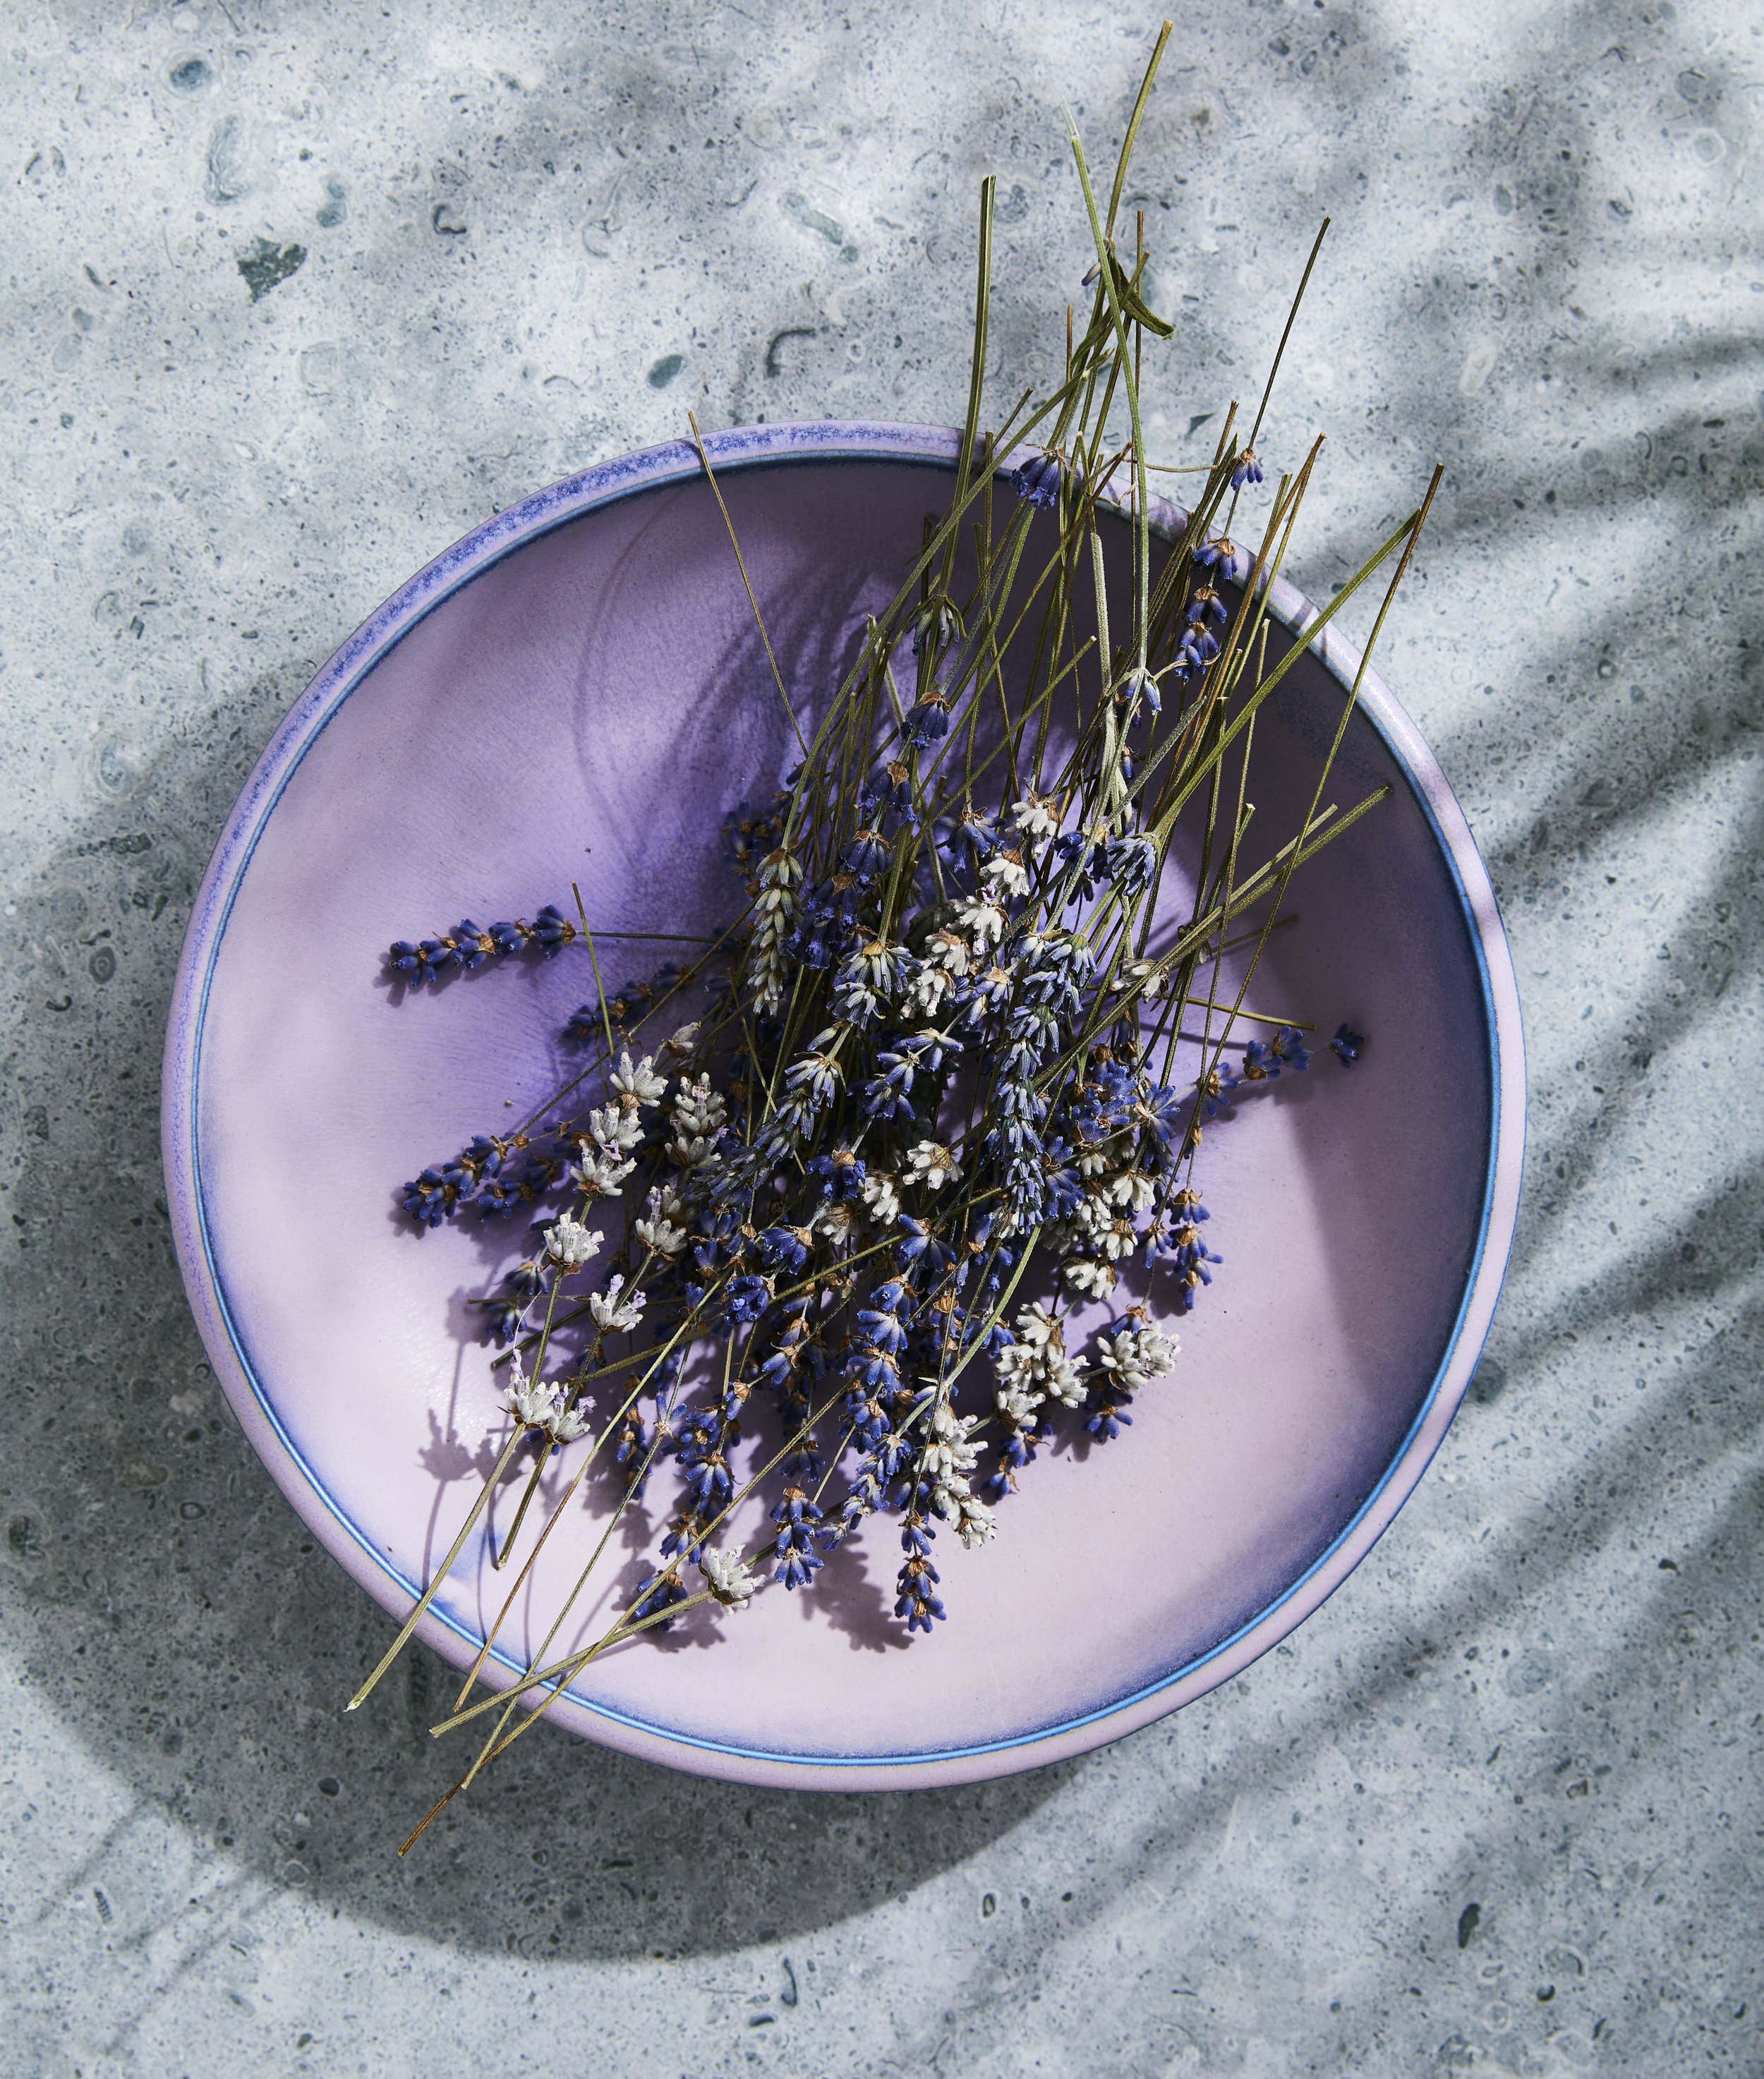 Charity Burggraaf | Cookbook Photographer | Seattle | Bellingham | Vancouver BC | Lavender Cookbook | Bonnie Louise Gillis | Garden Photographer | Harvesting Lavender